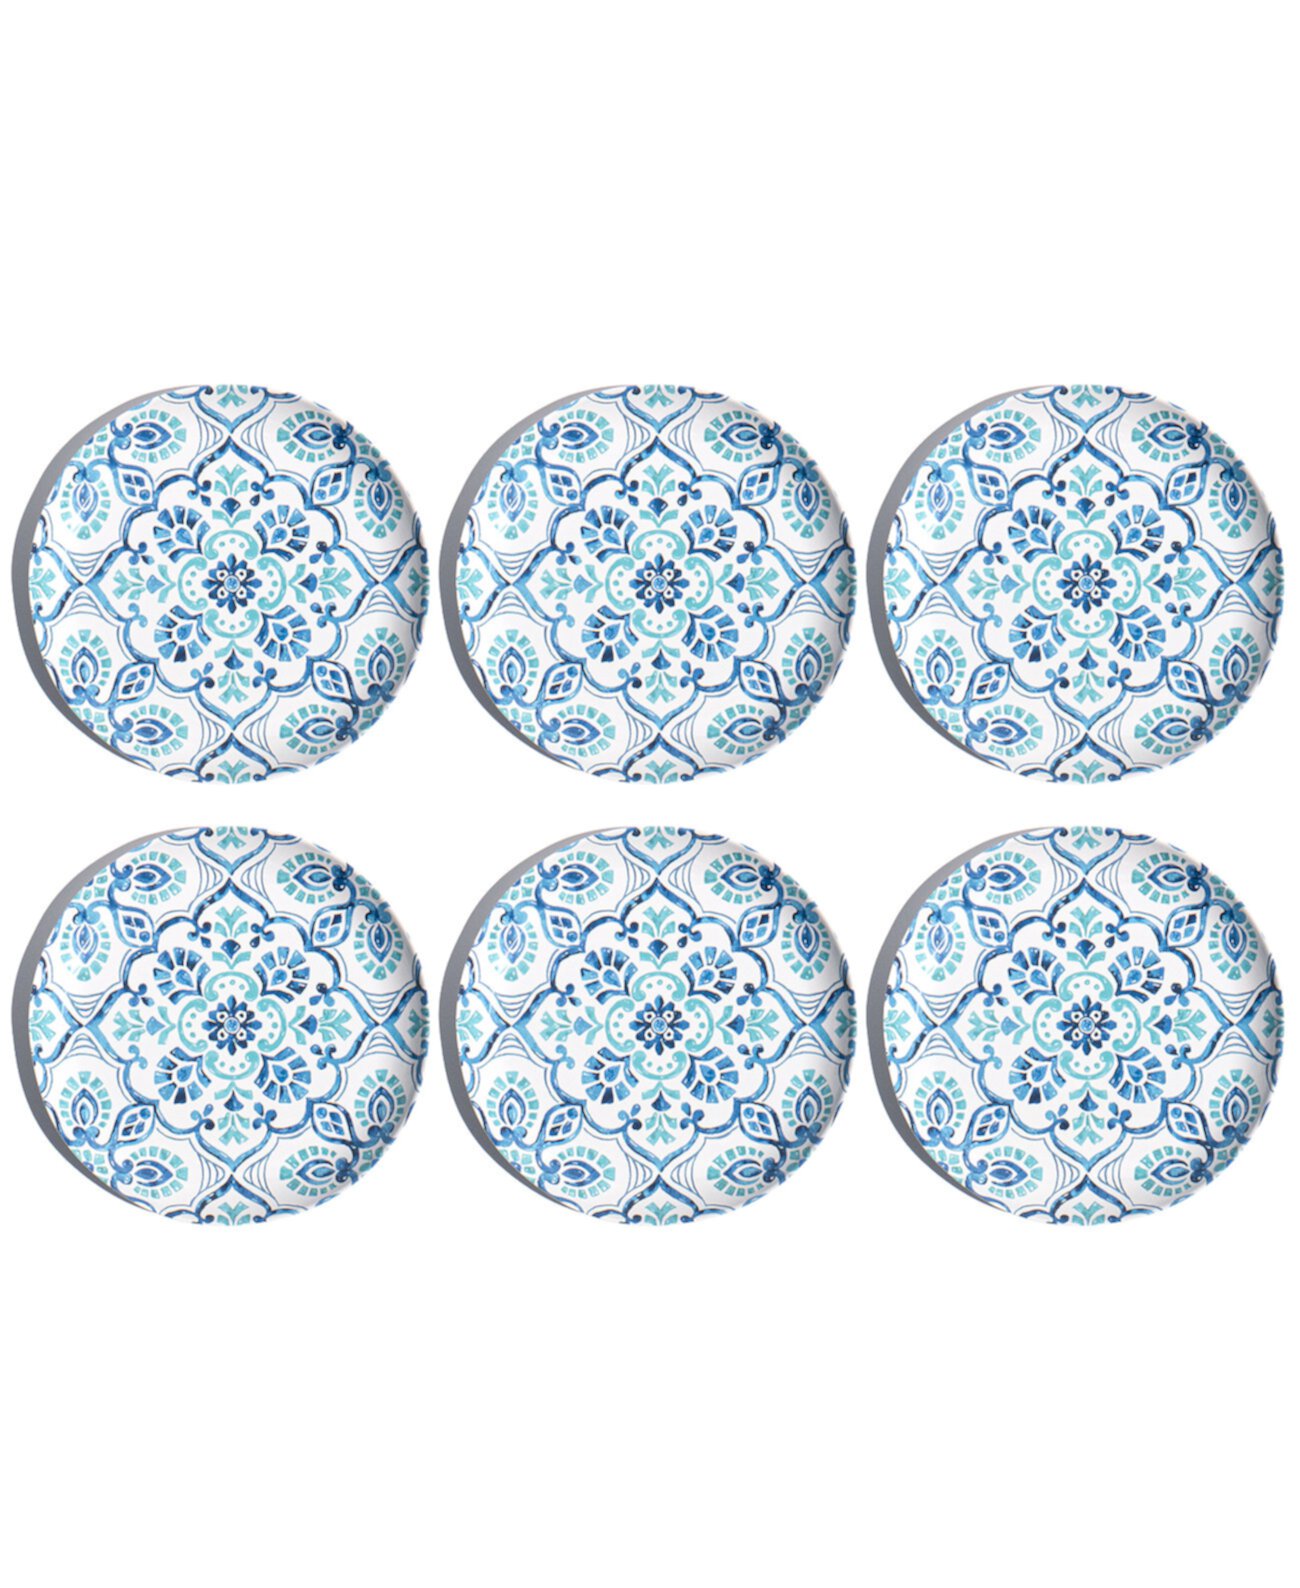 Салатные тарелки Palazzo Mosaic 8,5 дюйма, набор из 6 шт., сервиз на 6 персон TarHong